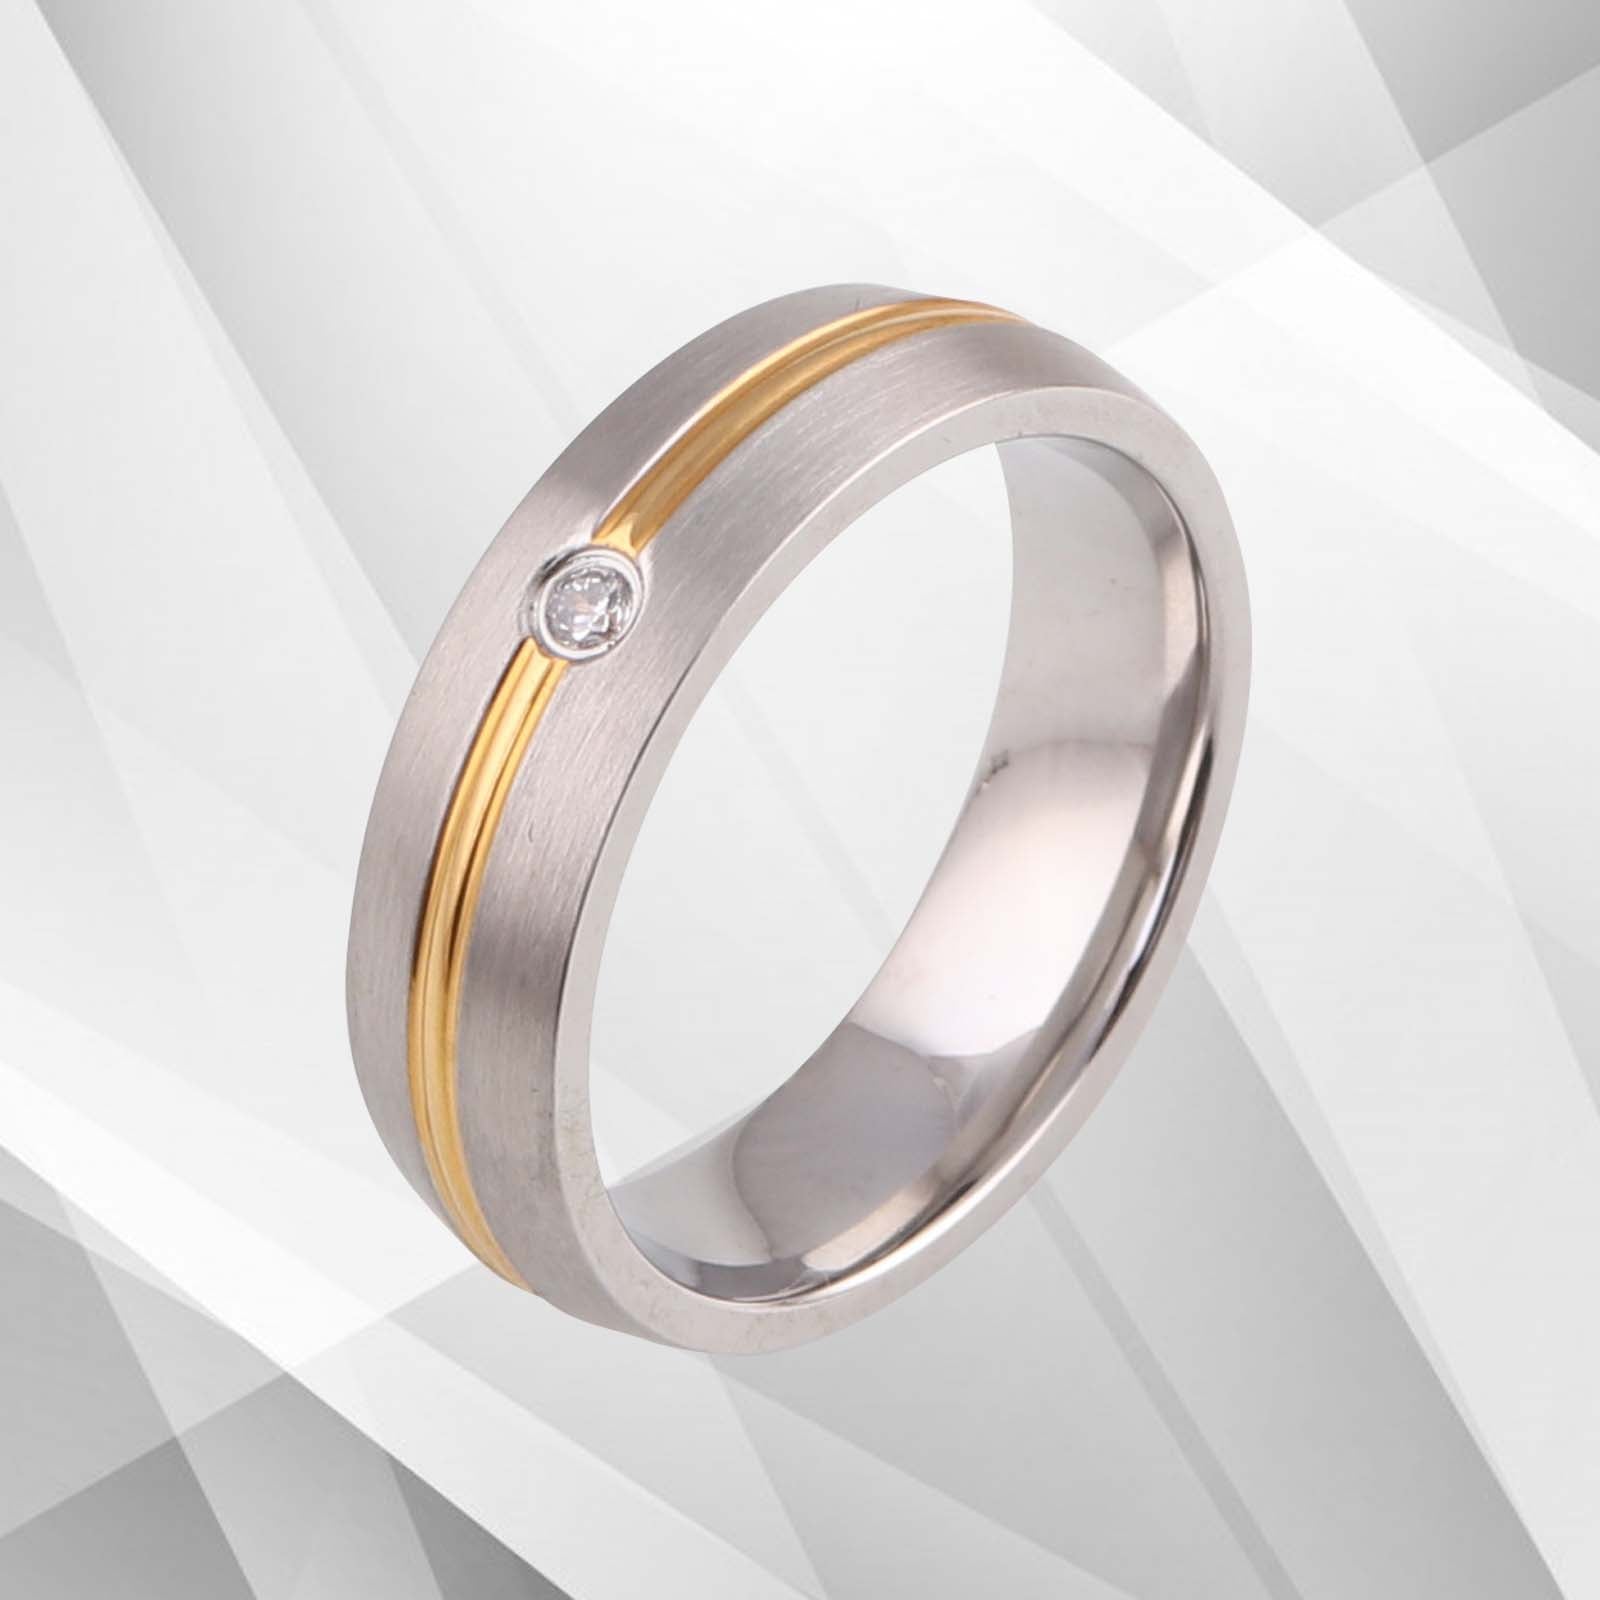 Titanium CZ Diamond Wedding Band Ring - 6mm Wide, 18Ct Yellow & White Gold Finish, Comfort Fit - Women's Engagement Ring - Jewelry & Watches - Bijou Her -  -  - 